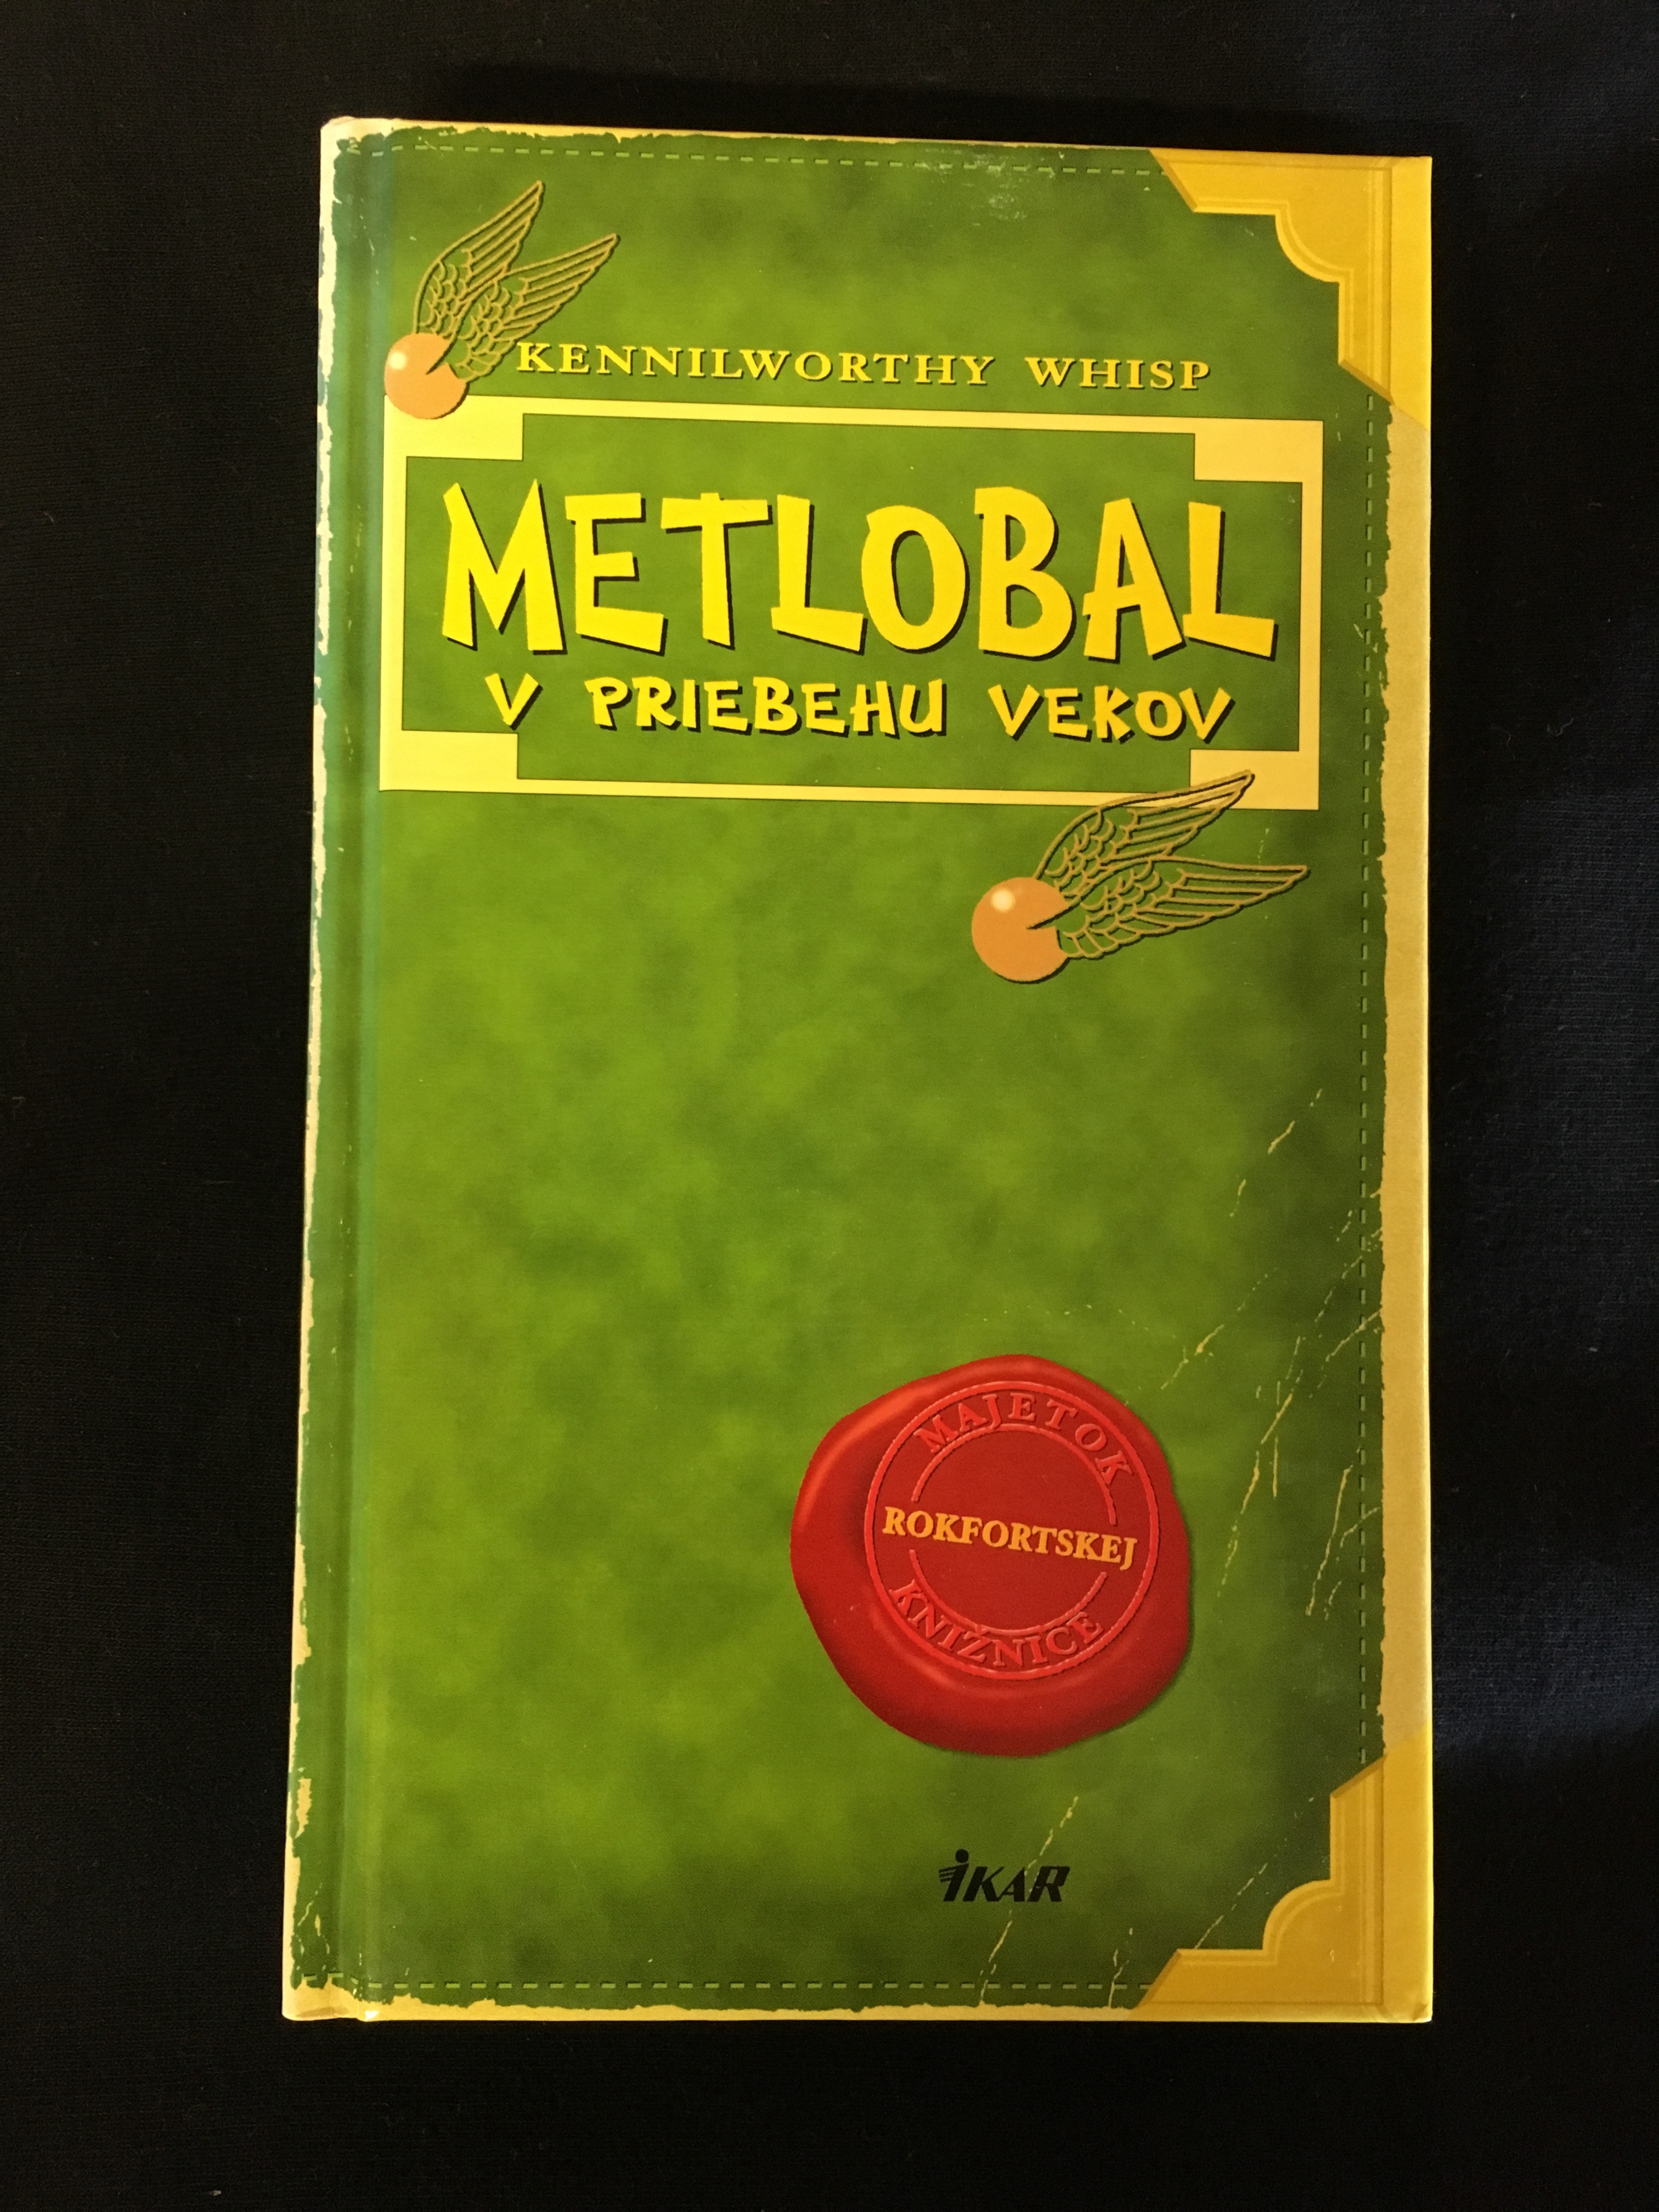 Kennilworthy Whisp-Metlobal v priebehu vekov